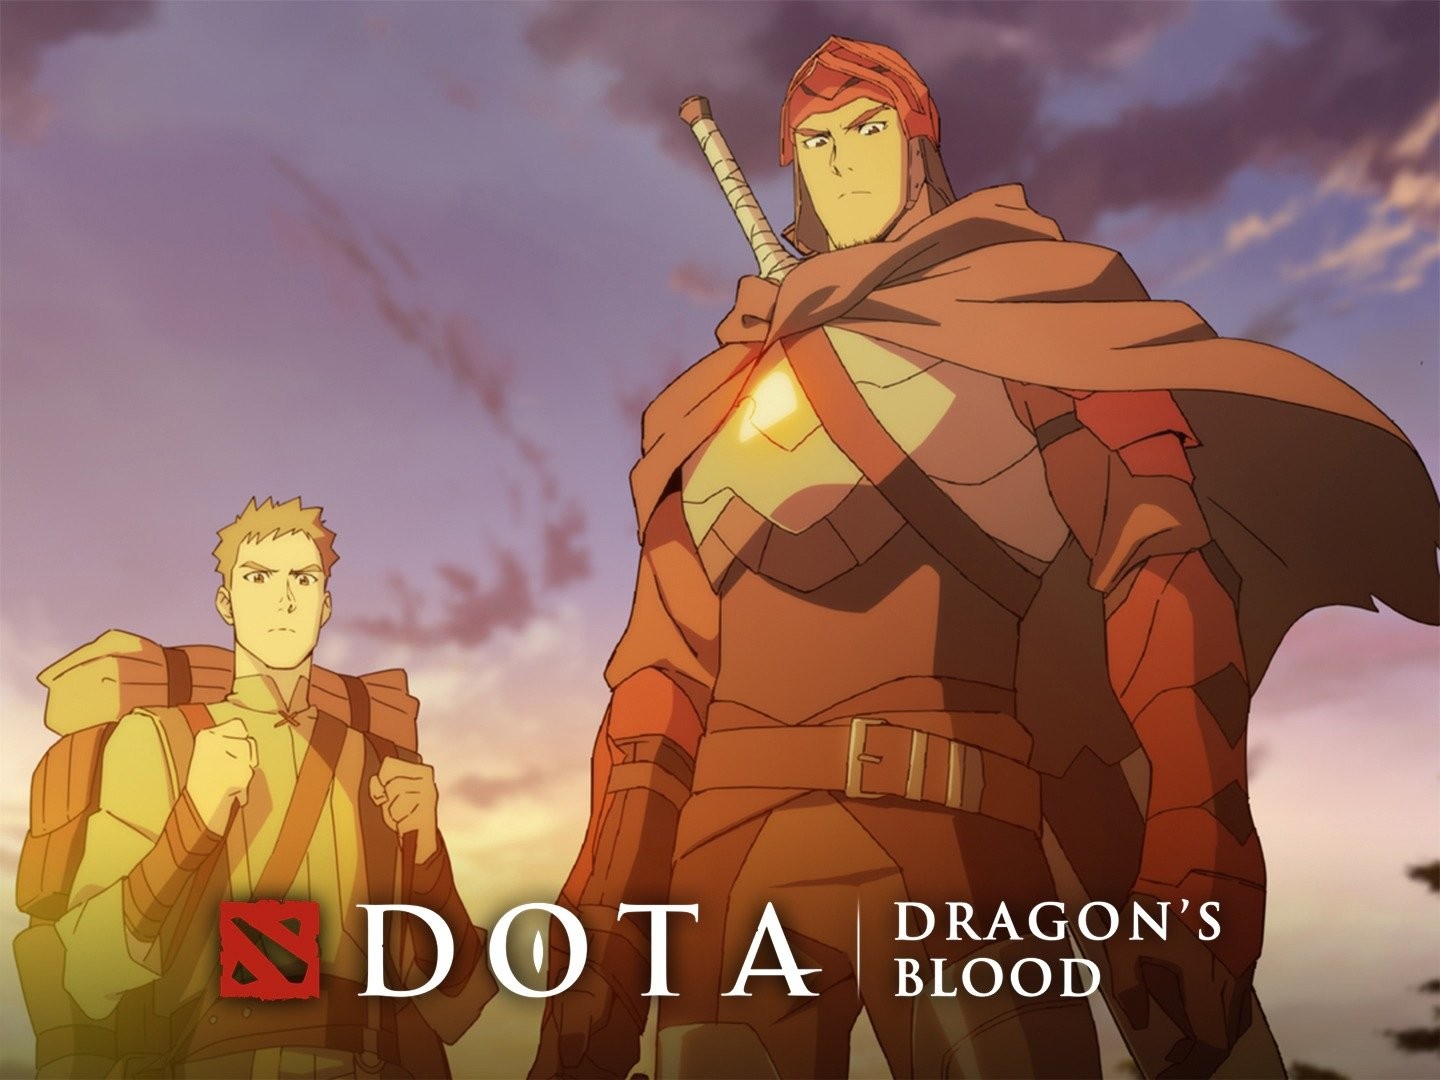 Dota Dragon's Blood Diaries - That's a Wrap (Episodes 3-8) - DOTA 2